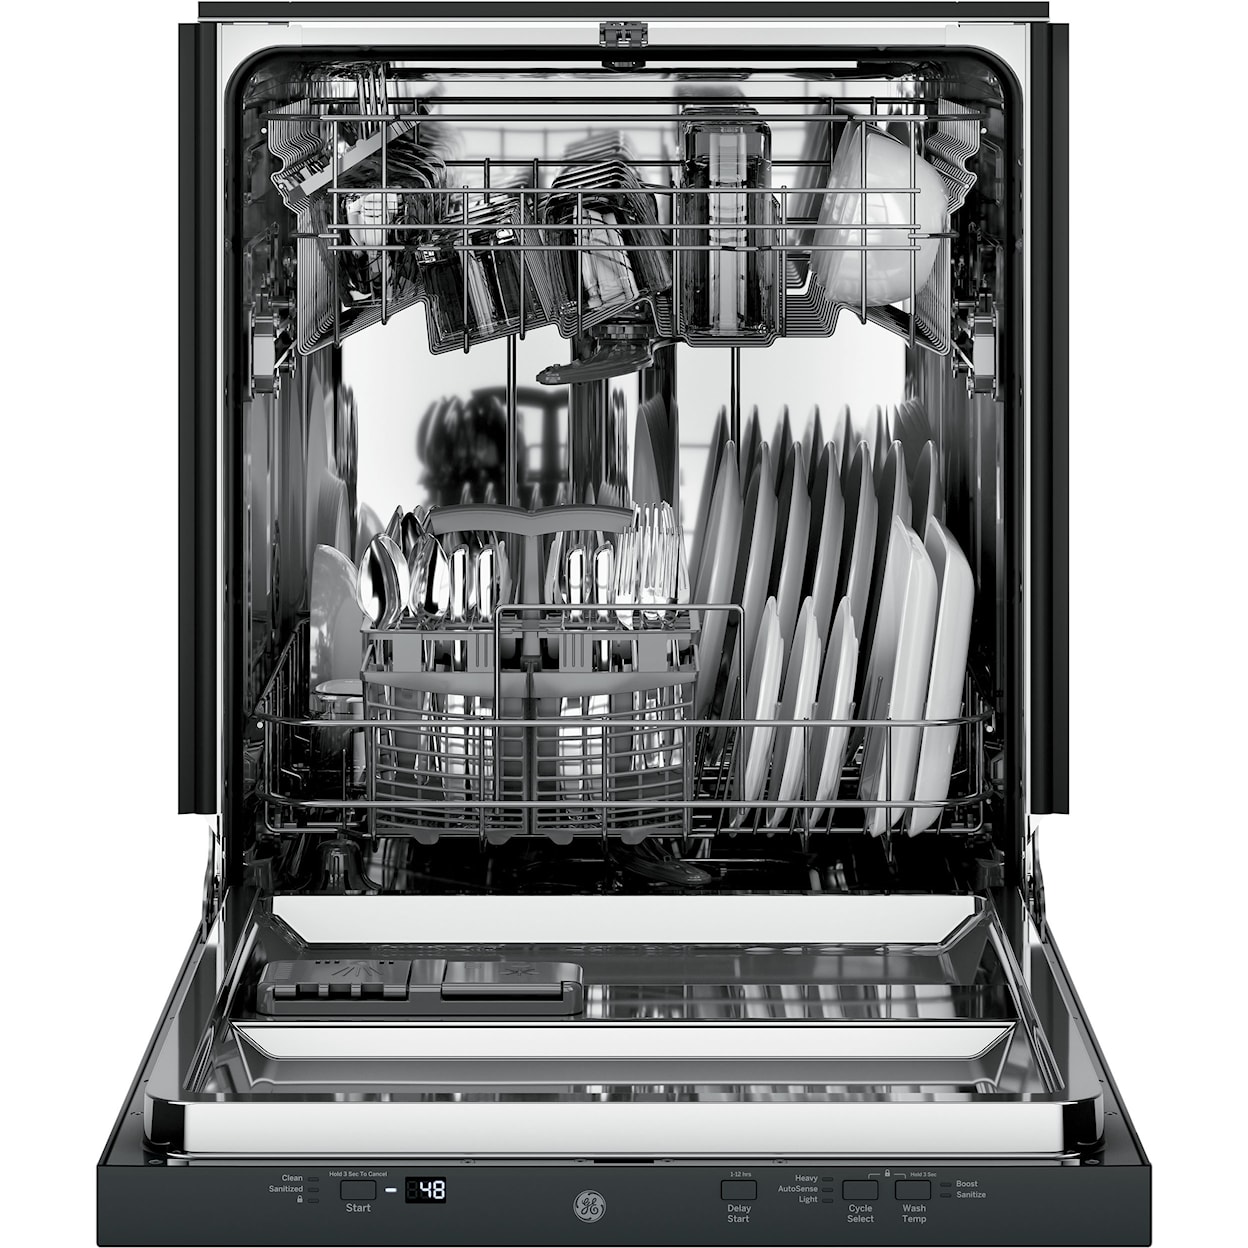 GE Appliances Dishwashers GE® Built-In Dishwasher